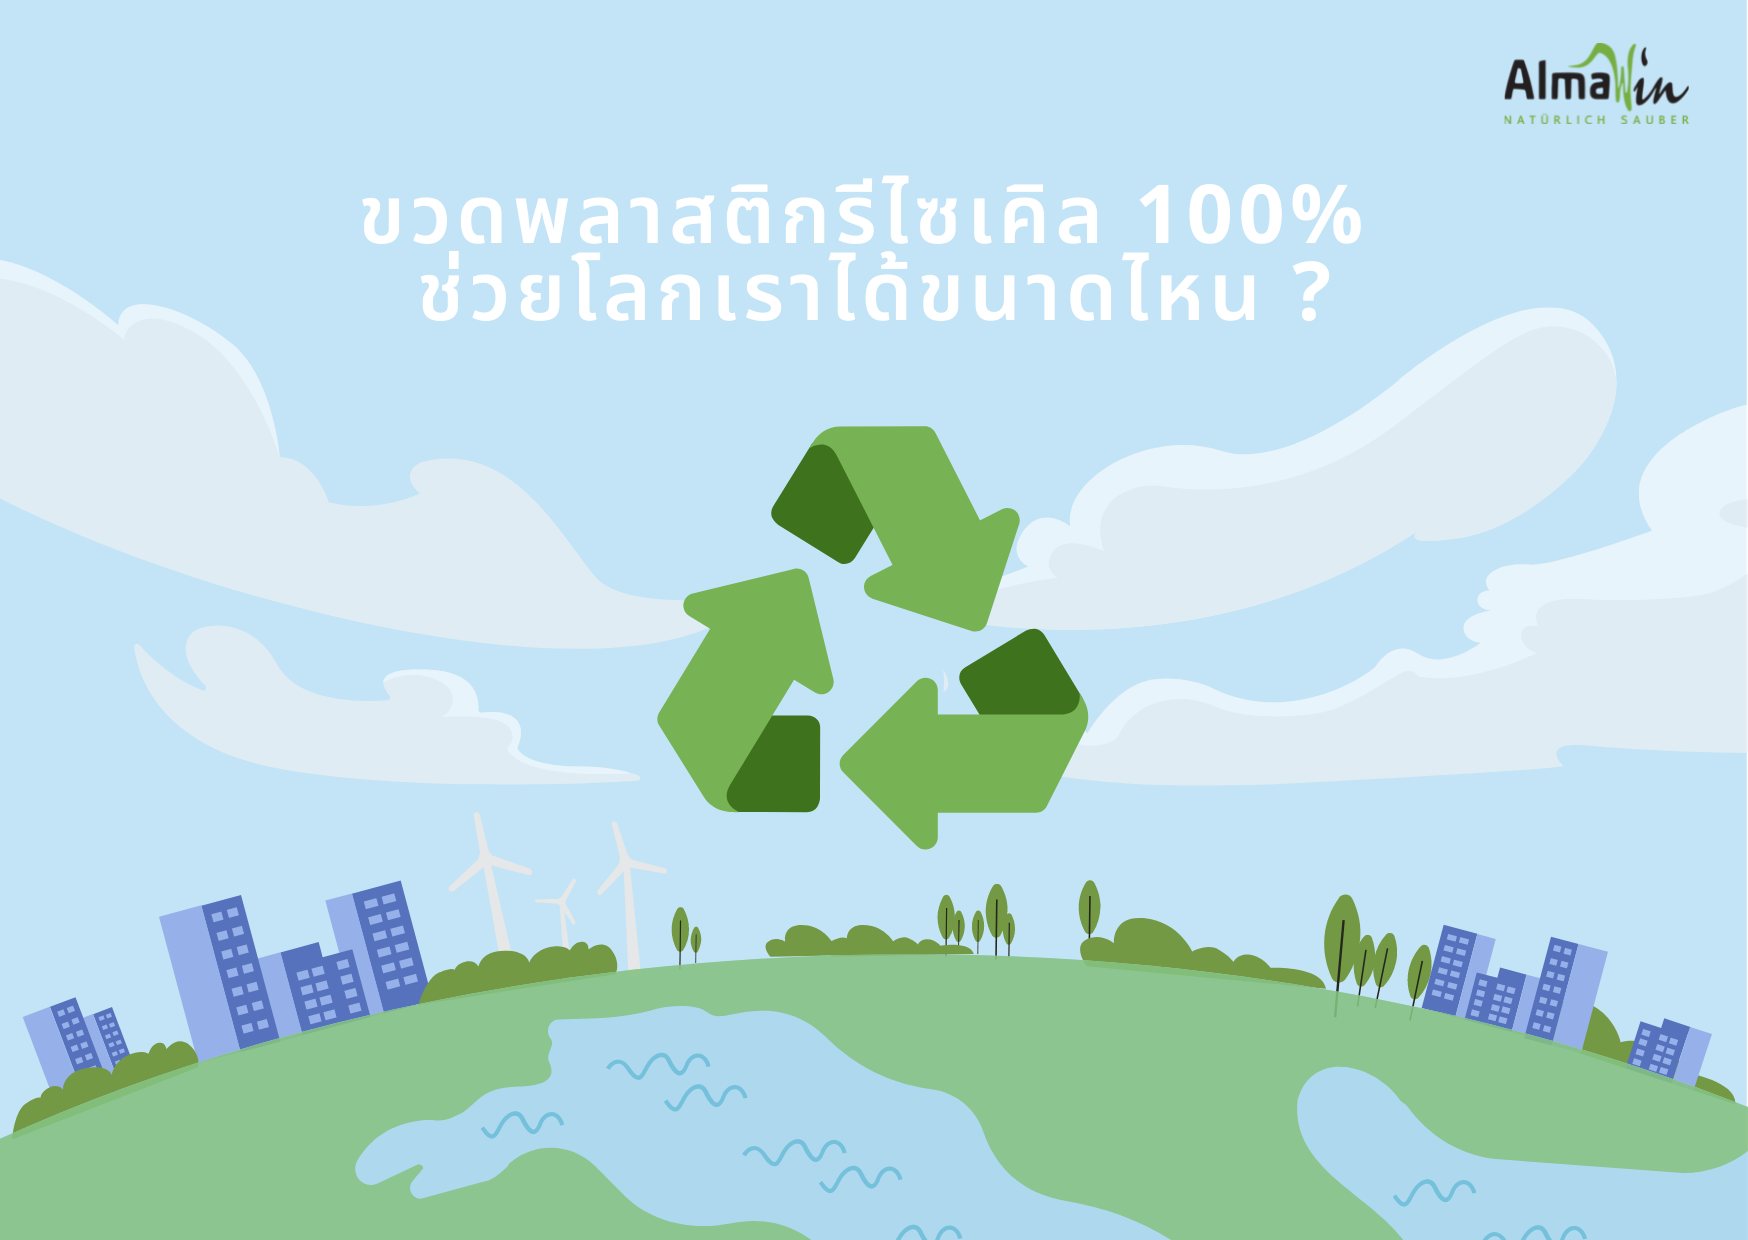 recycle helps earth ขวดพลาสติกรีไซเคิล